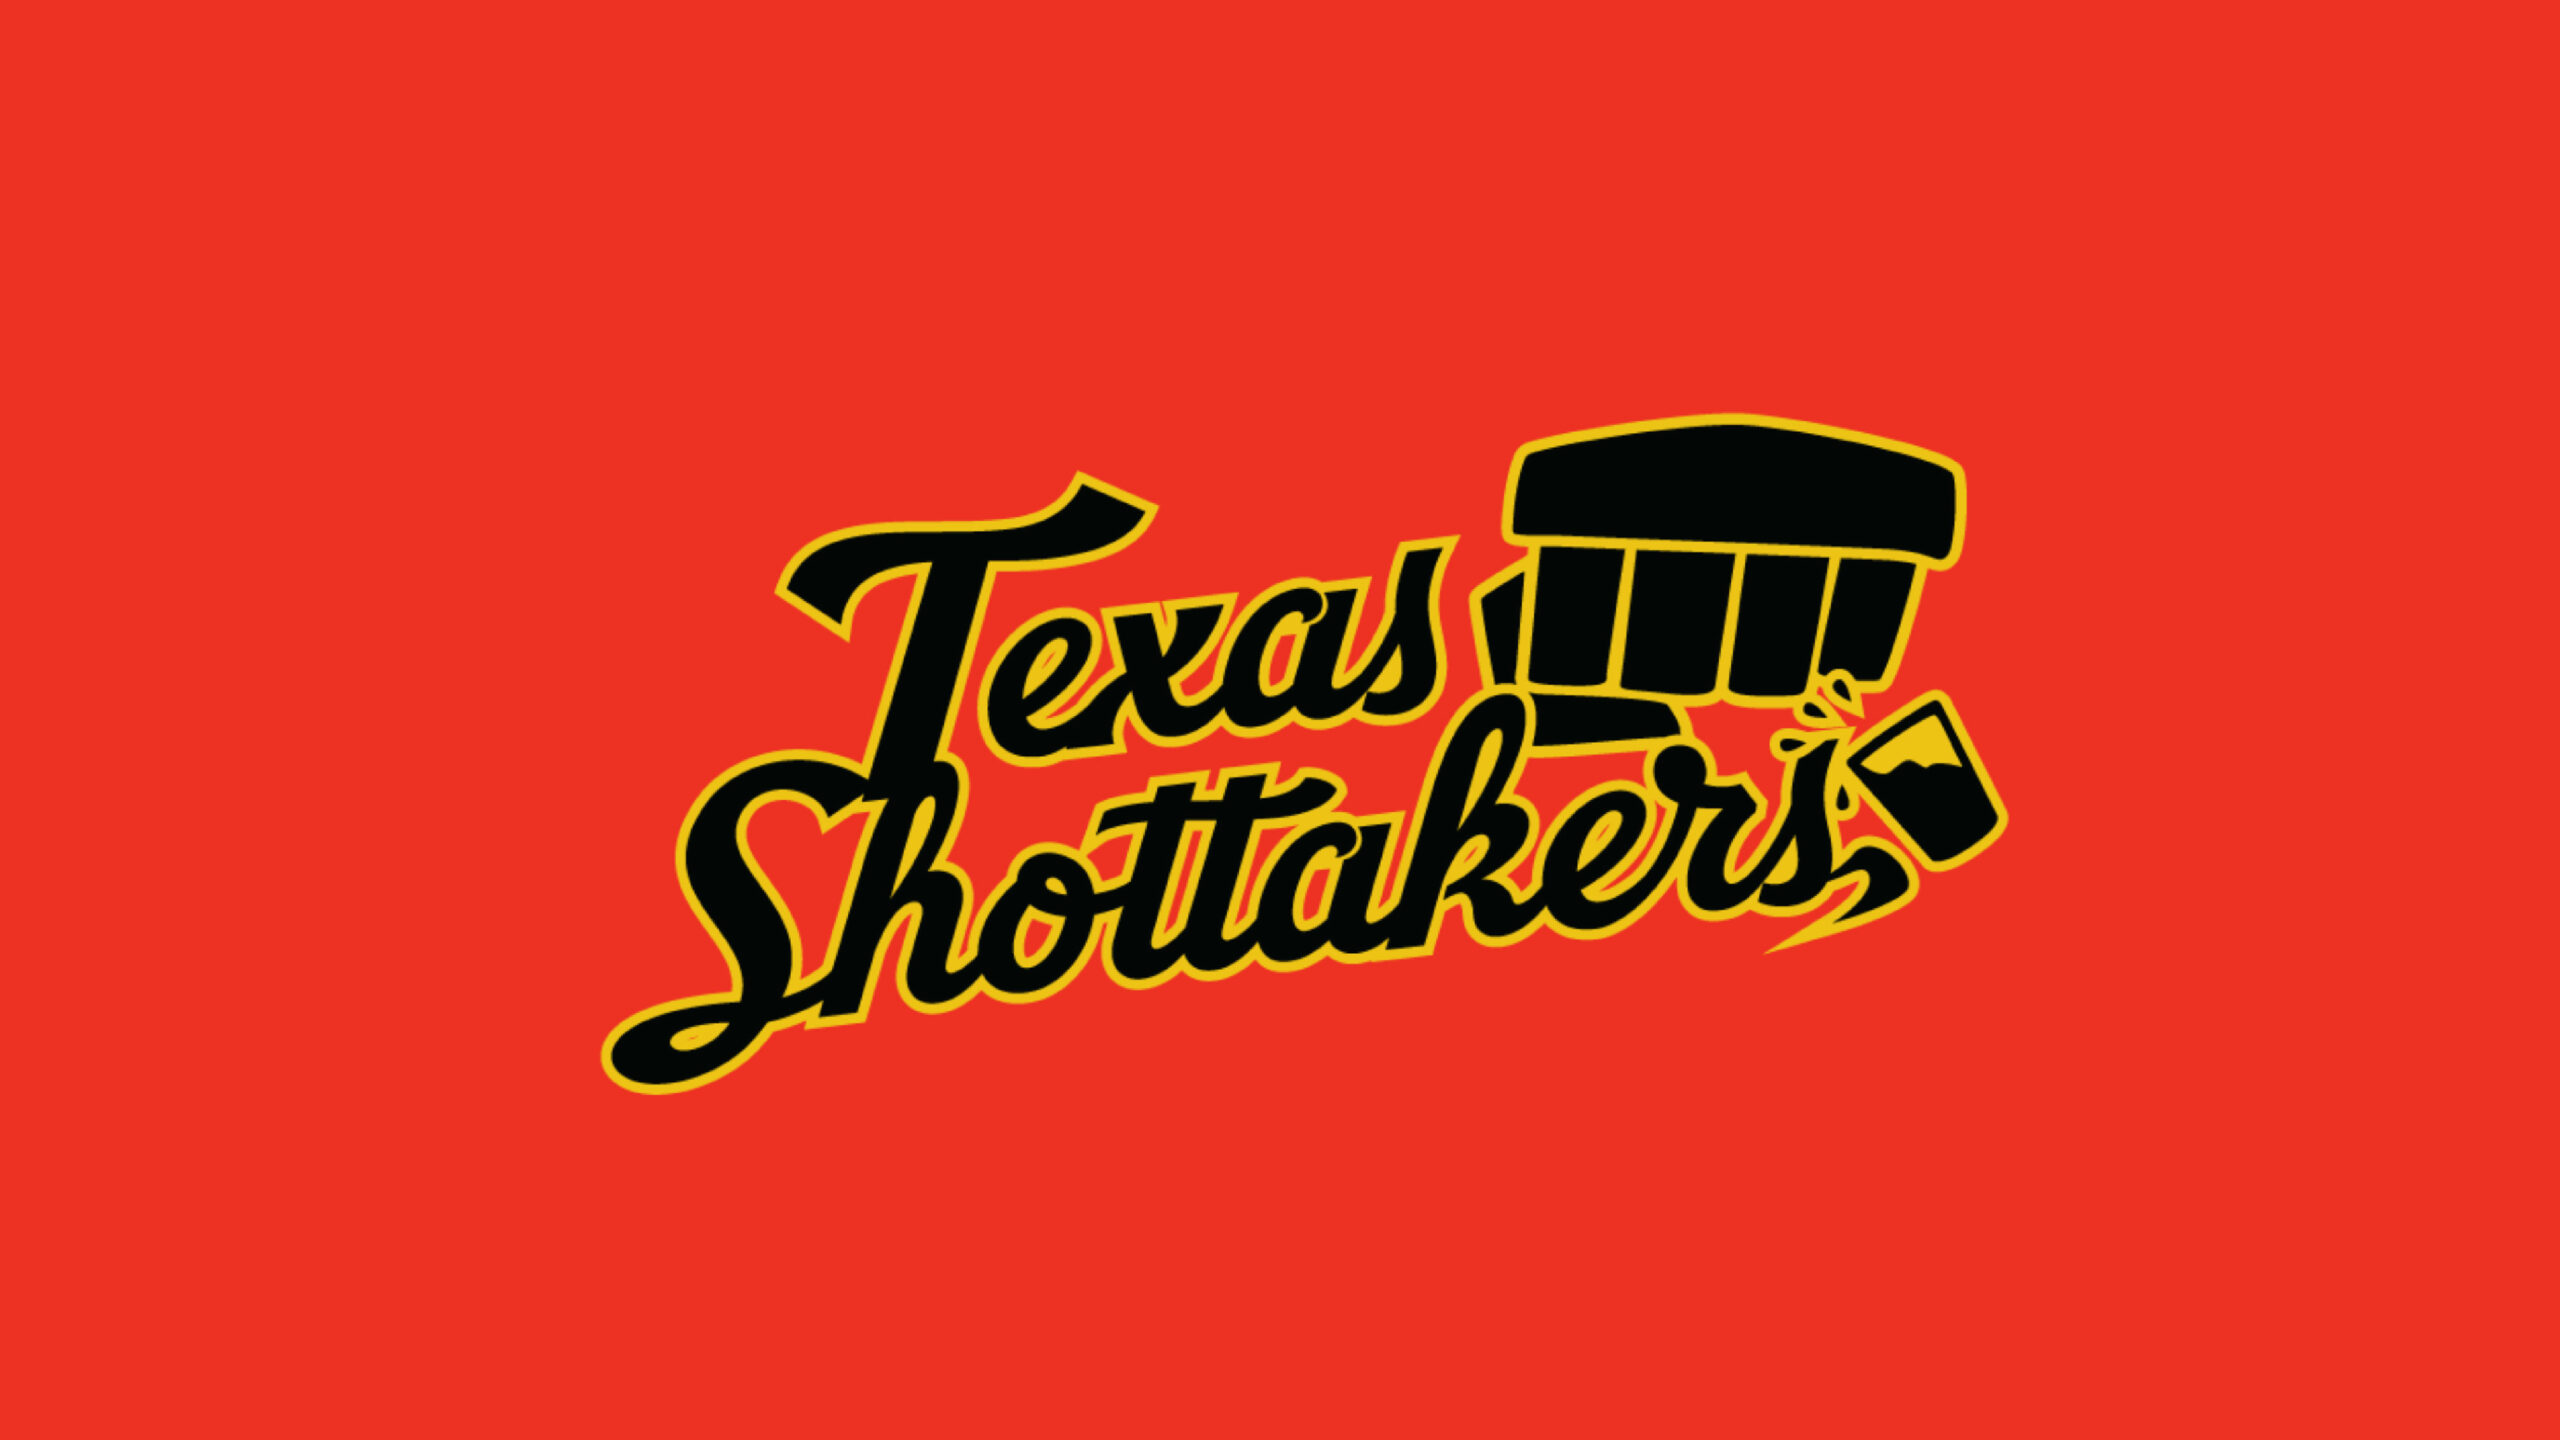 Sponsor Logos 169_Partner - Texas Shottakers